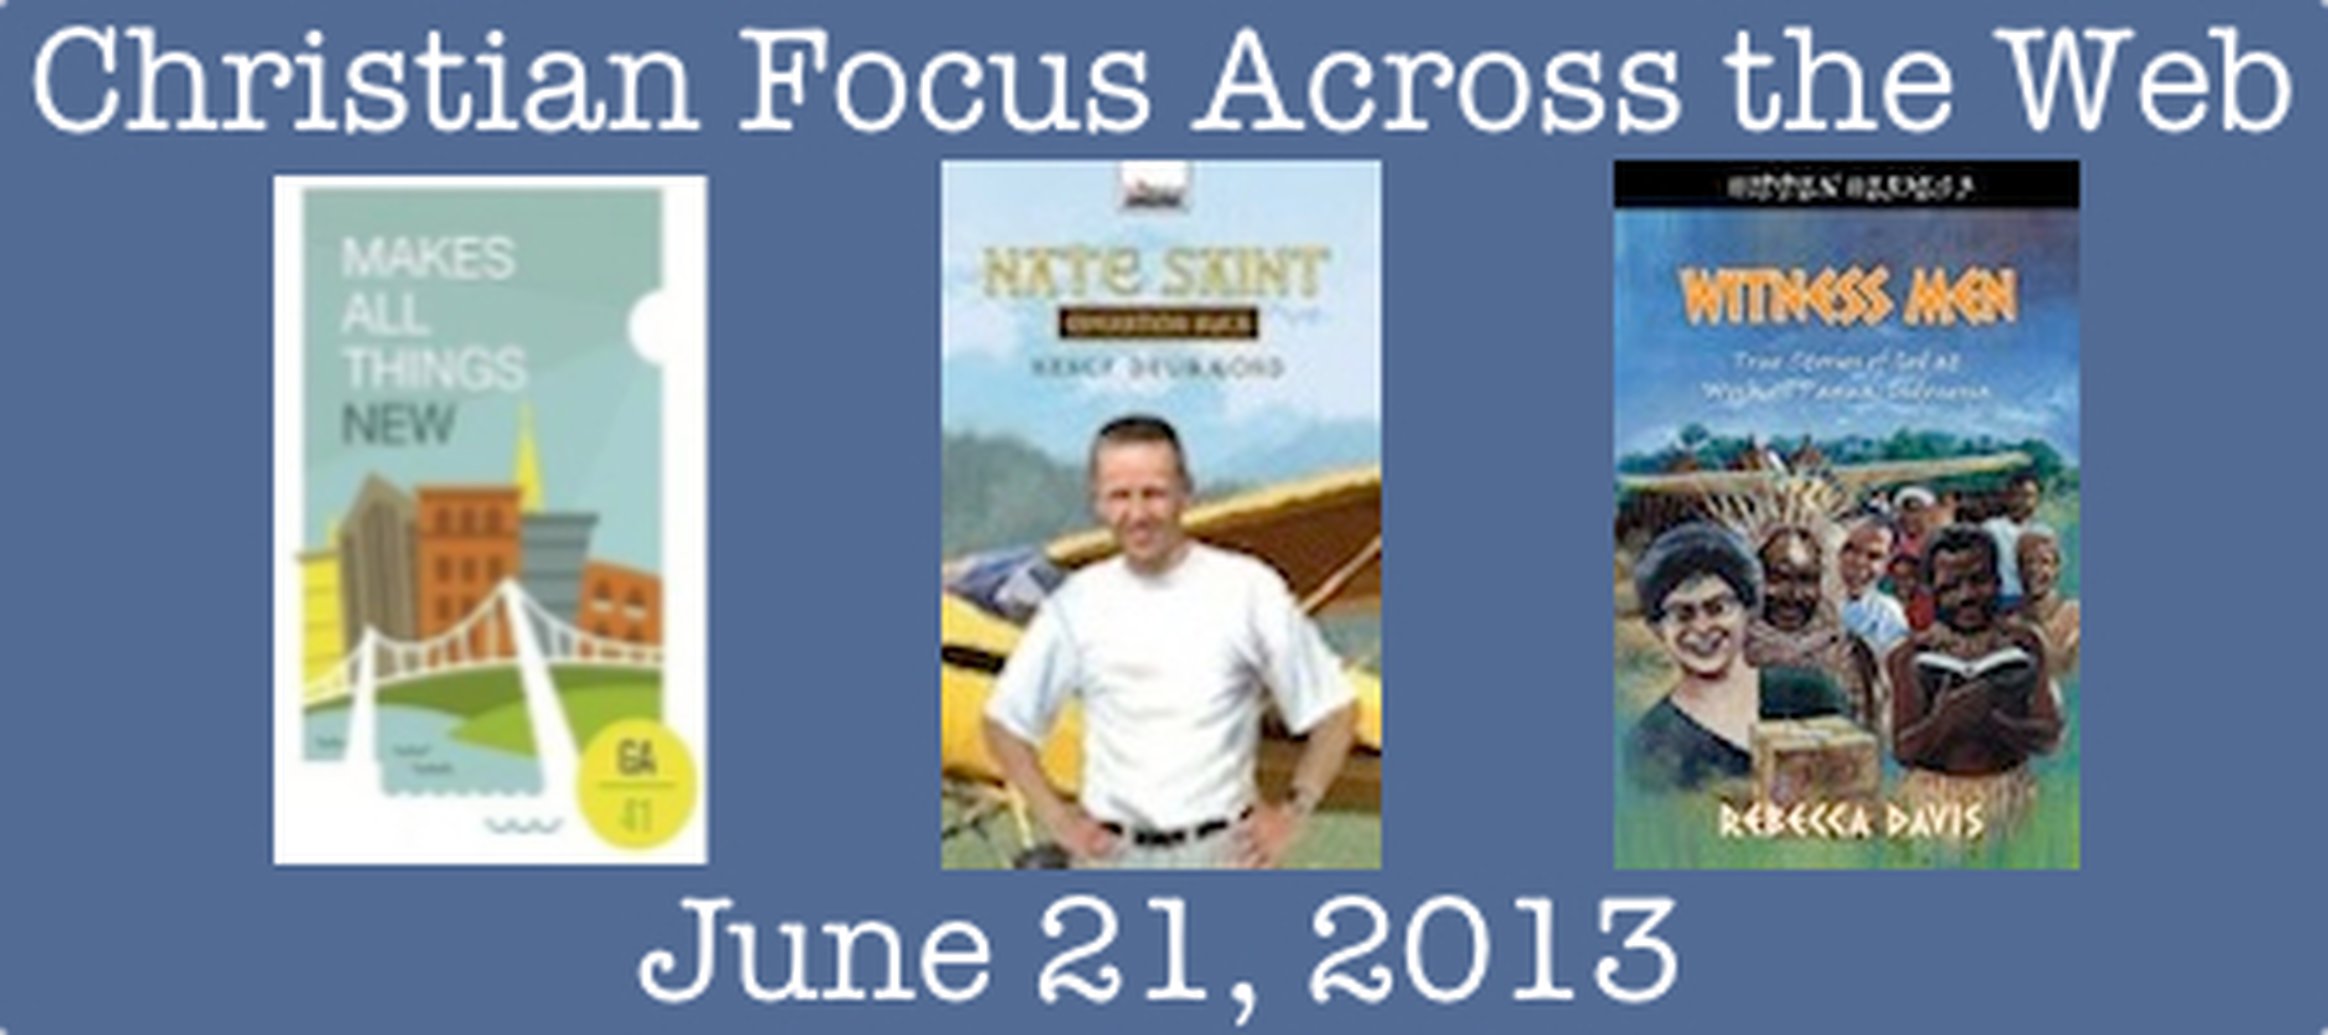 Christian Focus Across the Web - June 21, 2013